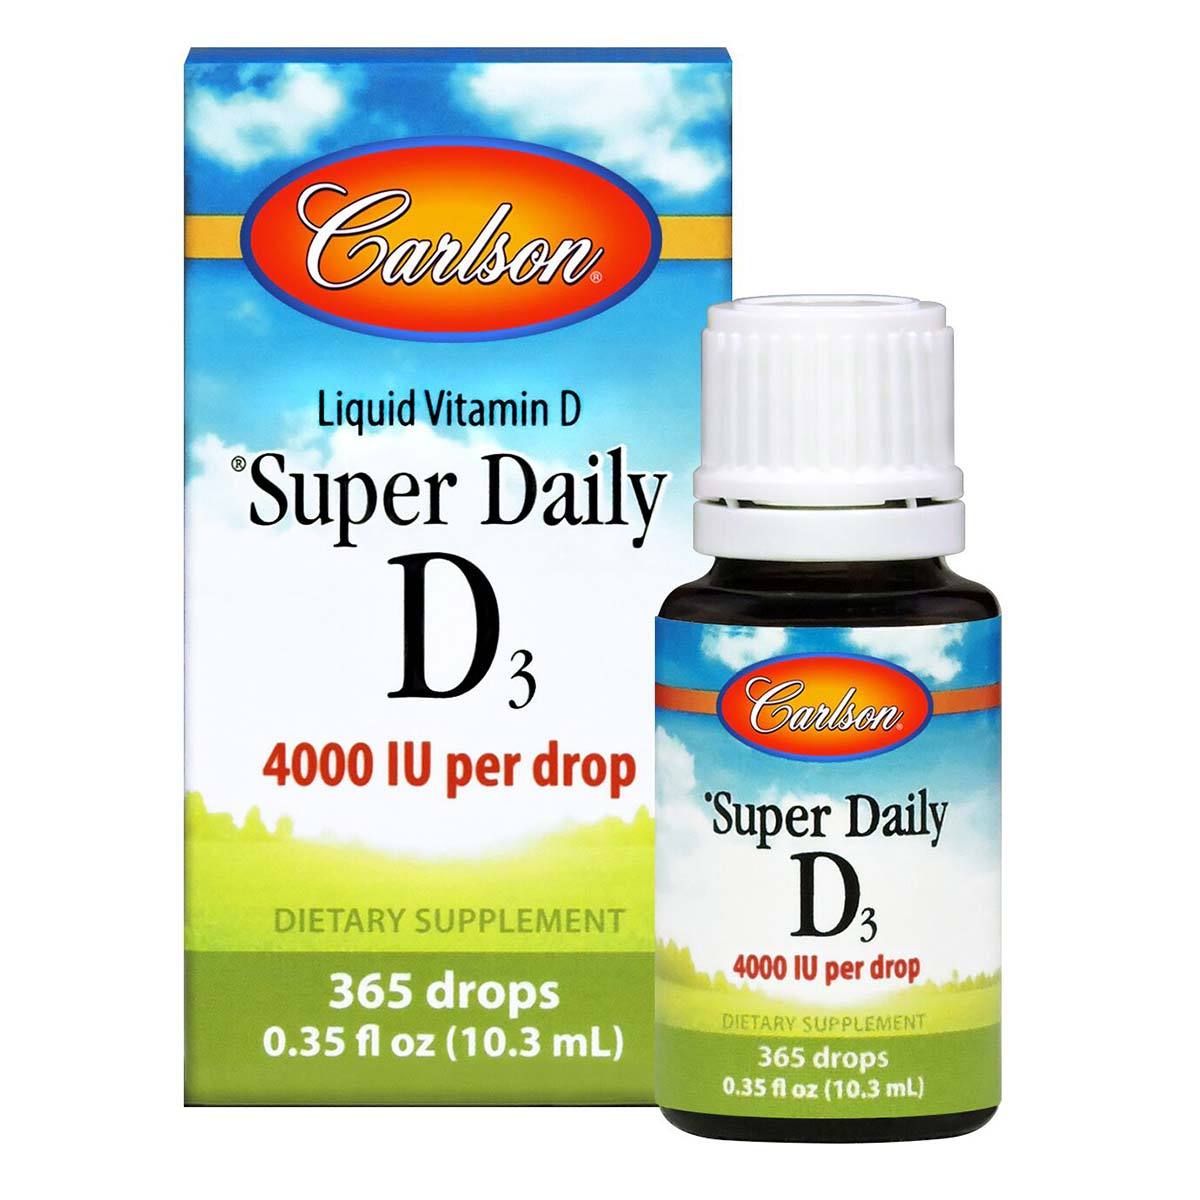 Primary image of Super Daily D3 4000IU